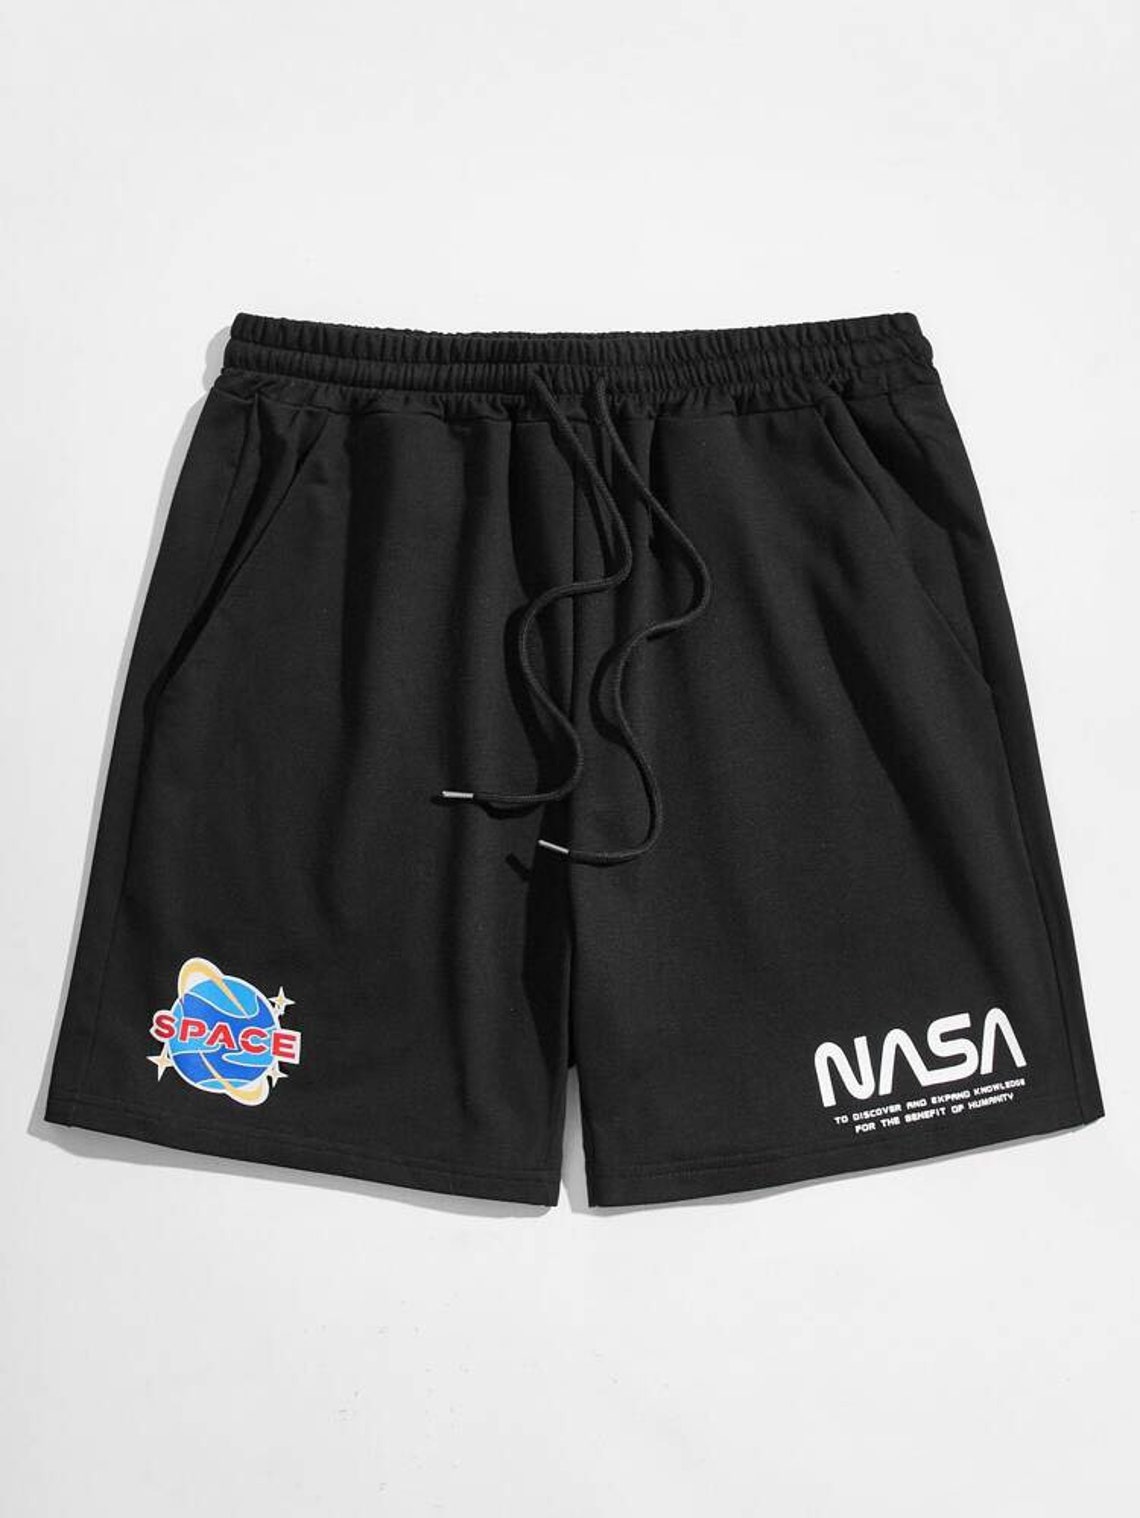 NASA ActiveWear Mens Shorts SportsWears Mens Appeals ProDri | Etsy